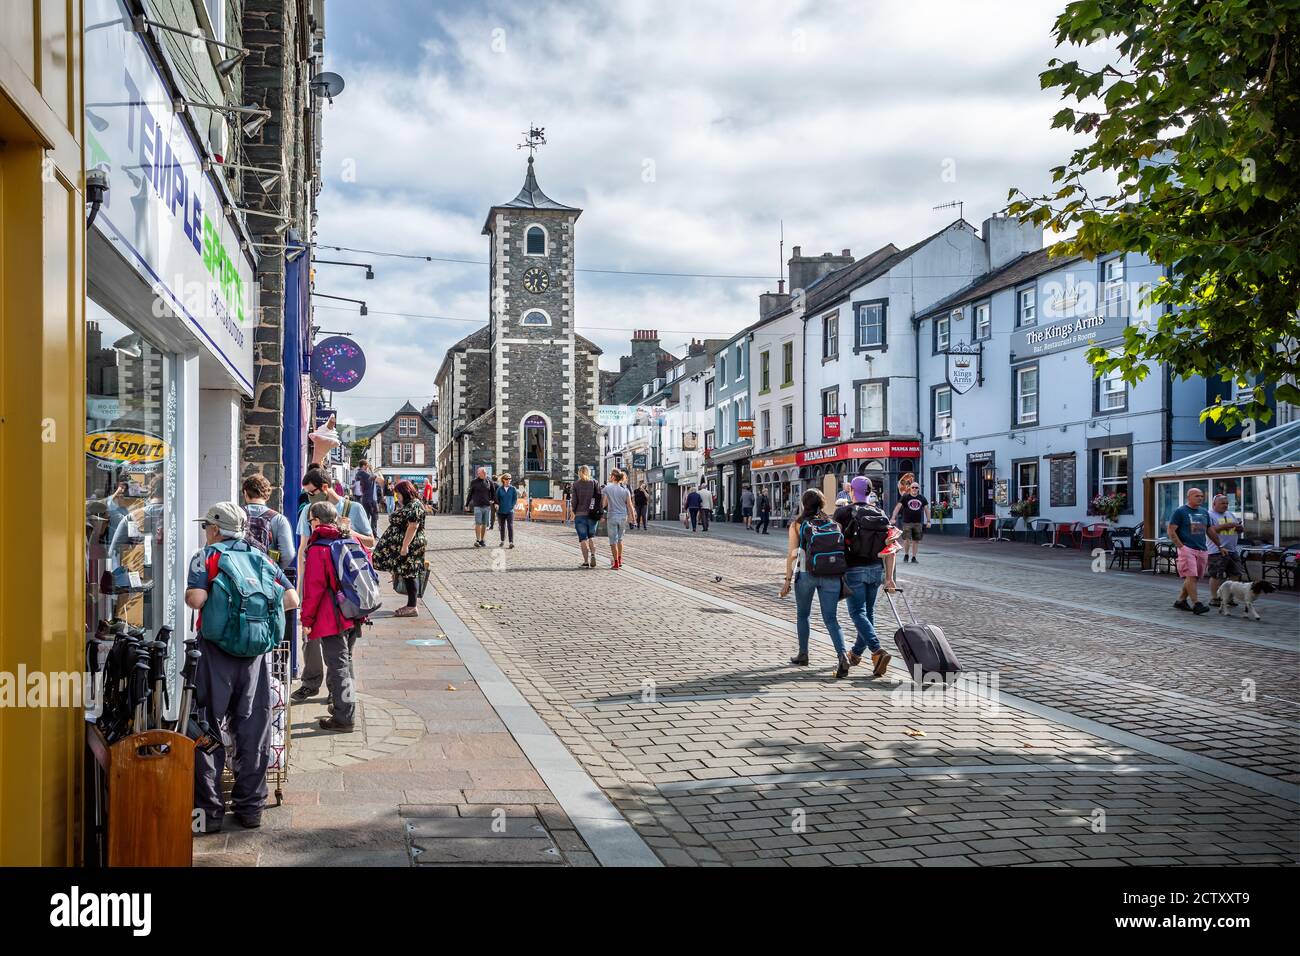 Historic Moot Hall and surrounding shops in Main Street Keswick, Cumbria, UK on 18 September 2020 Stock Photo